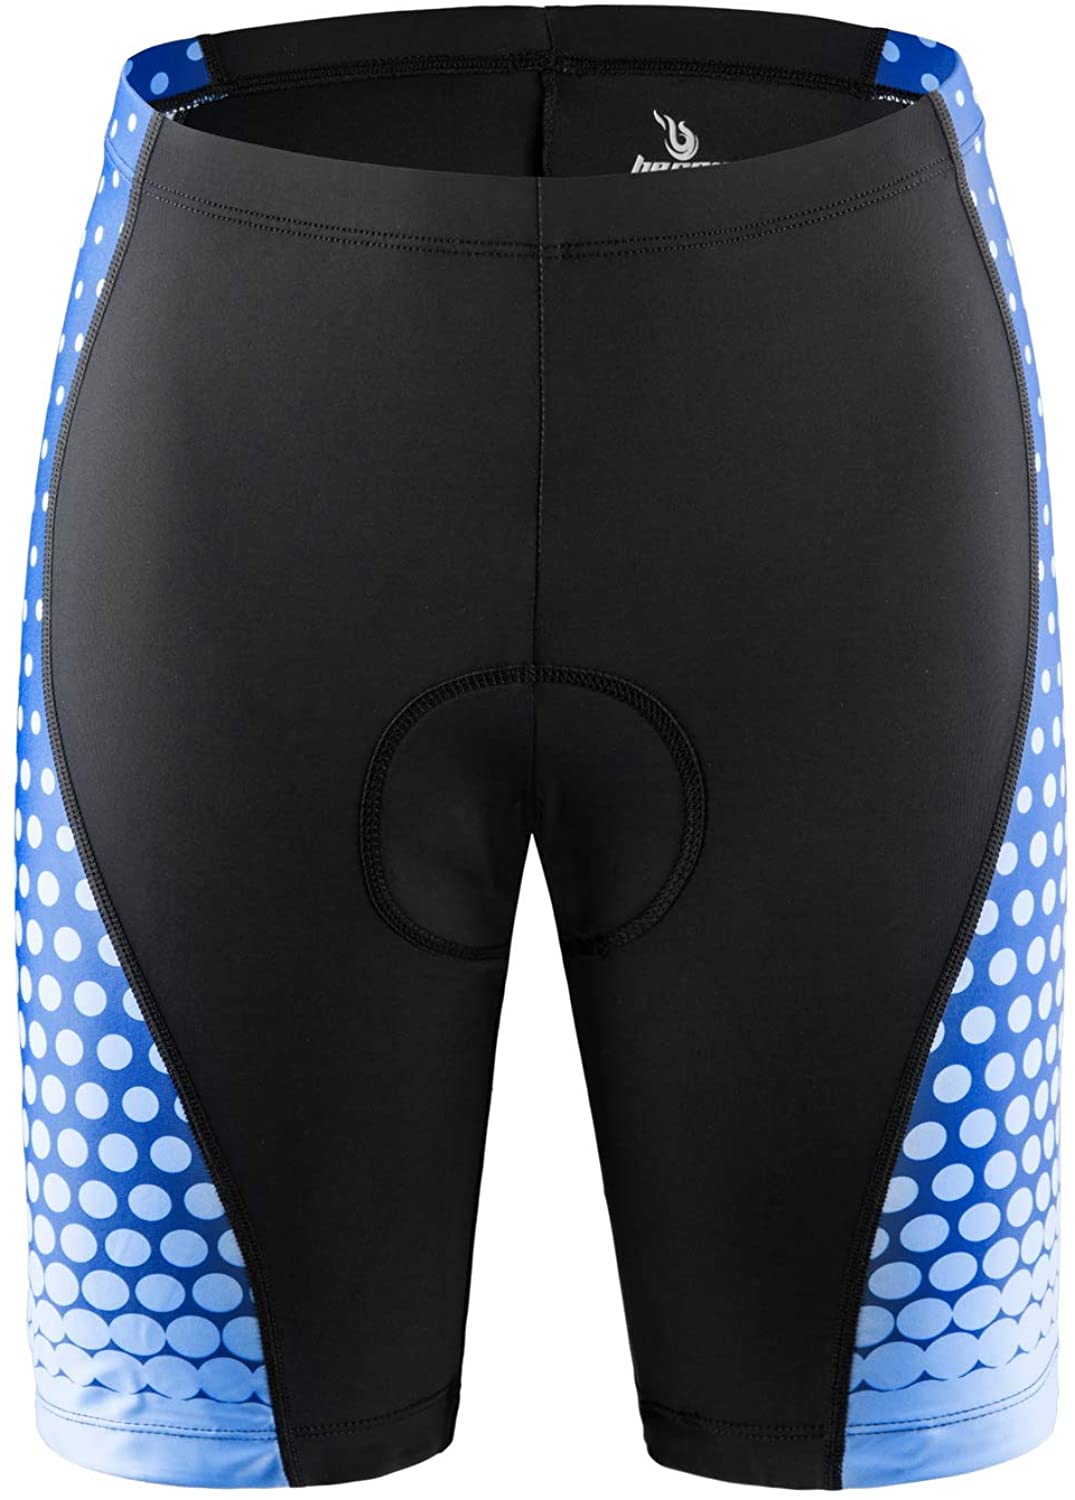 Bike Shorts Women with Padding Gel, 3D Padded Cycling Underwear